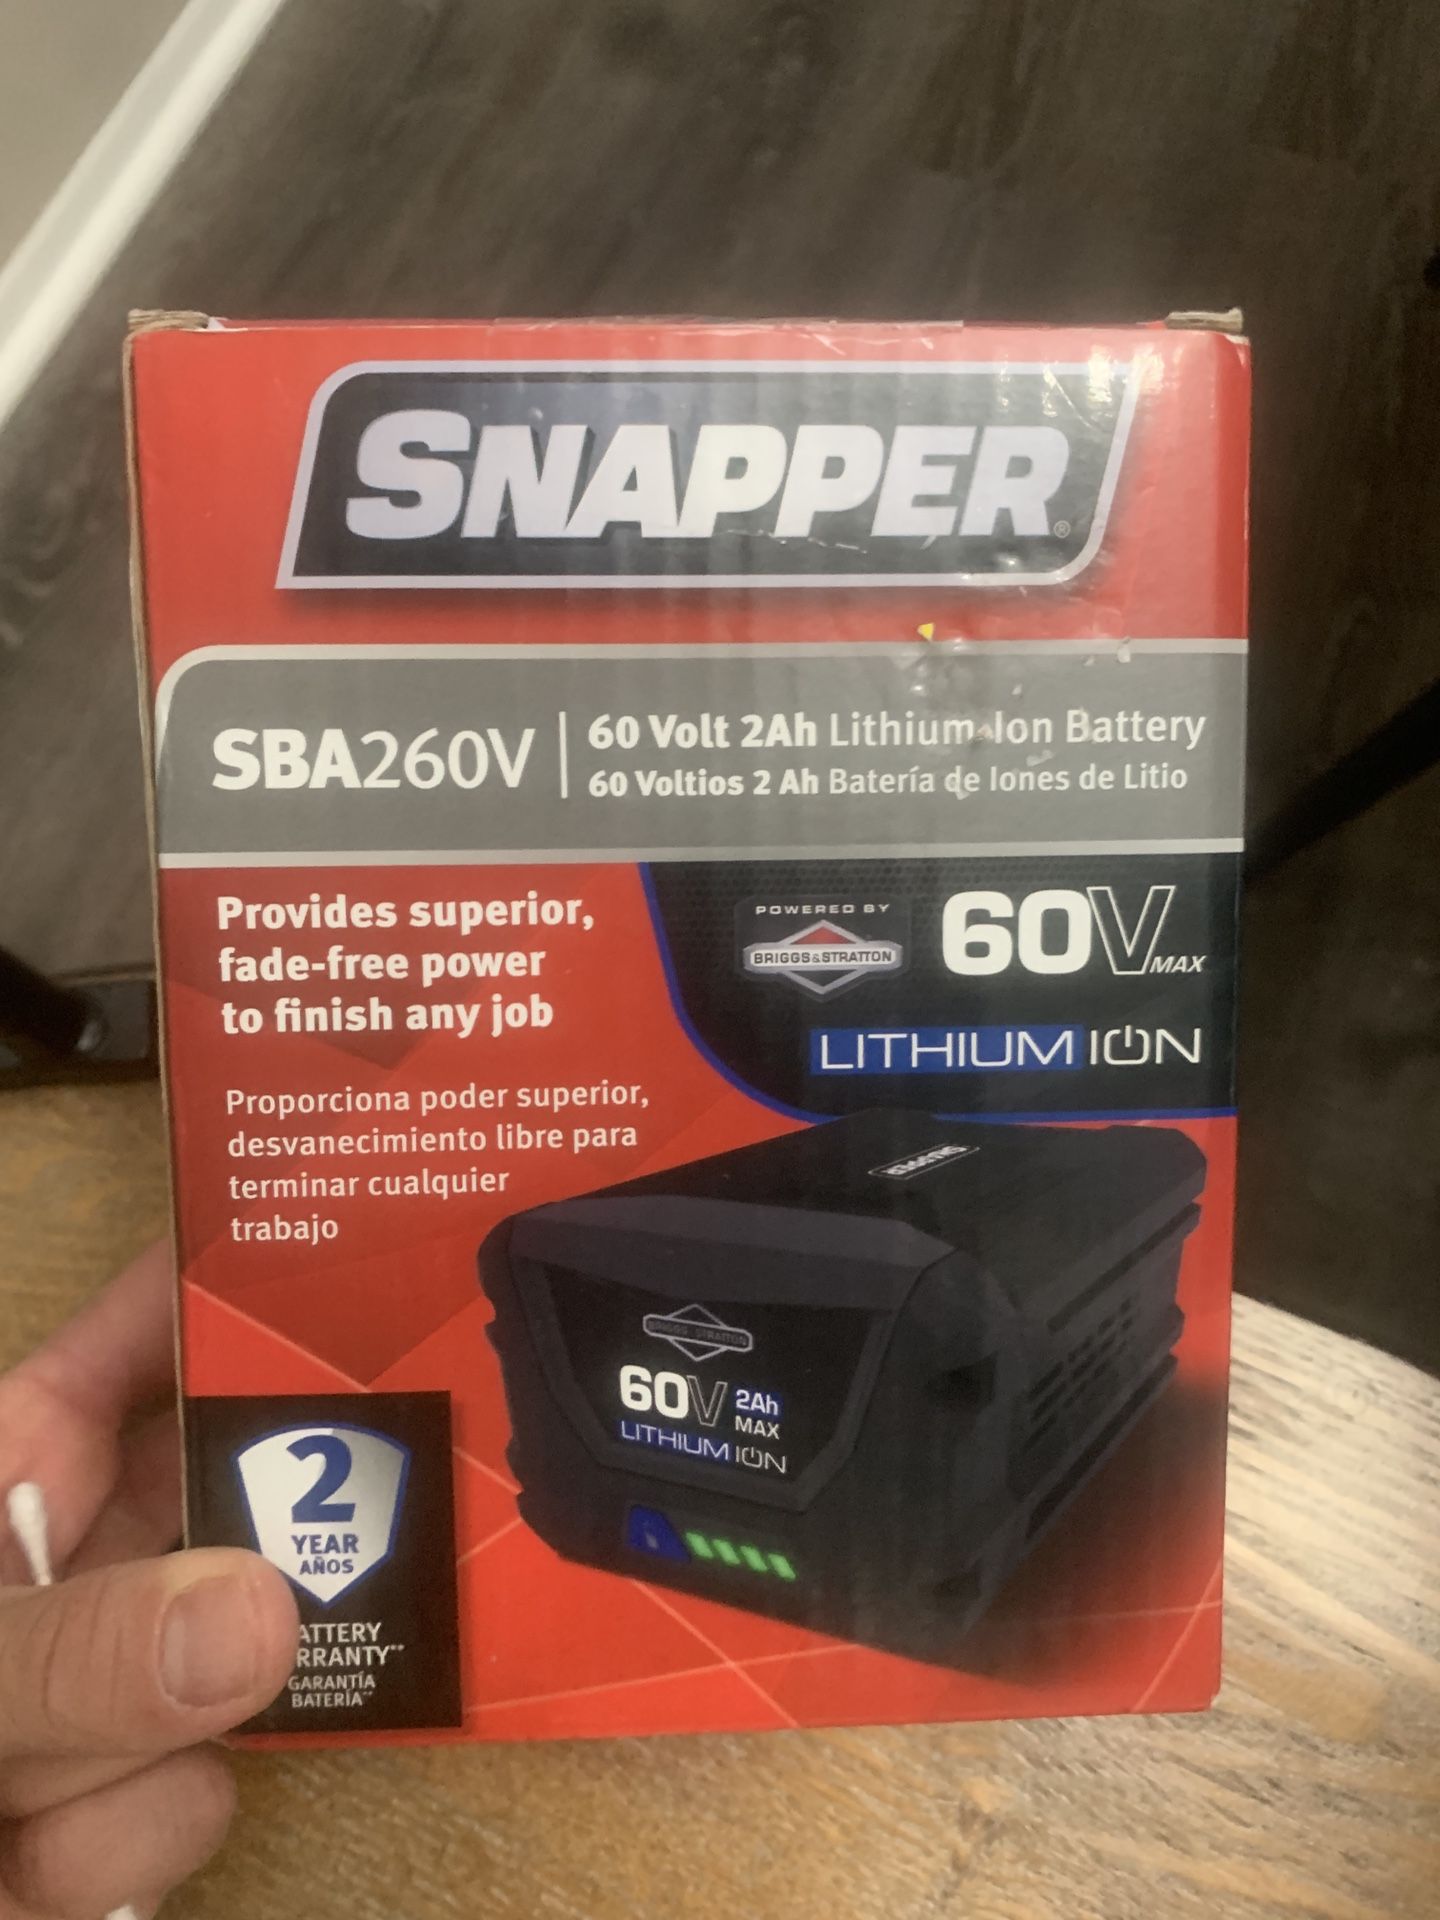 Snapper SBA260V 60 Volt 2Ah Lithium Ion Battery